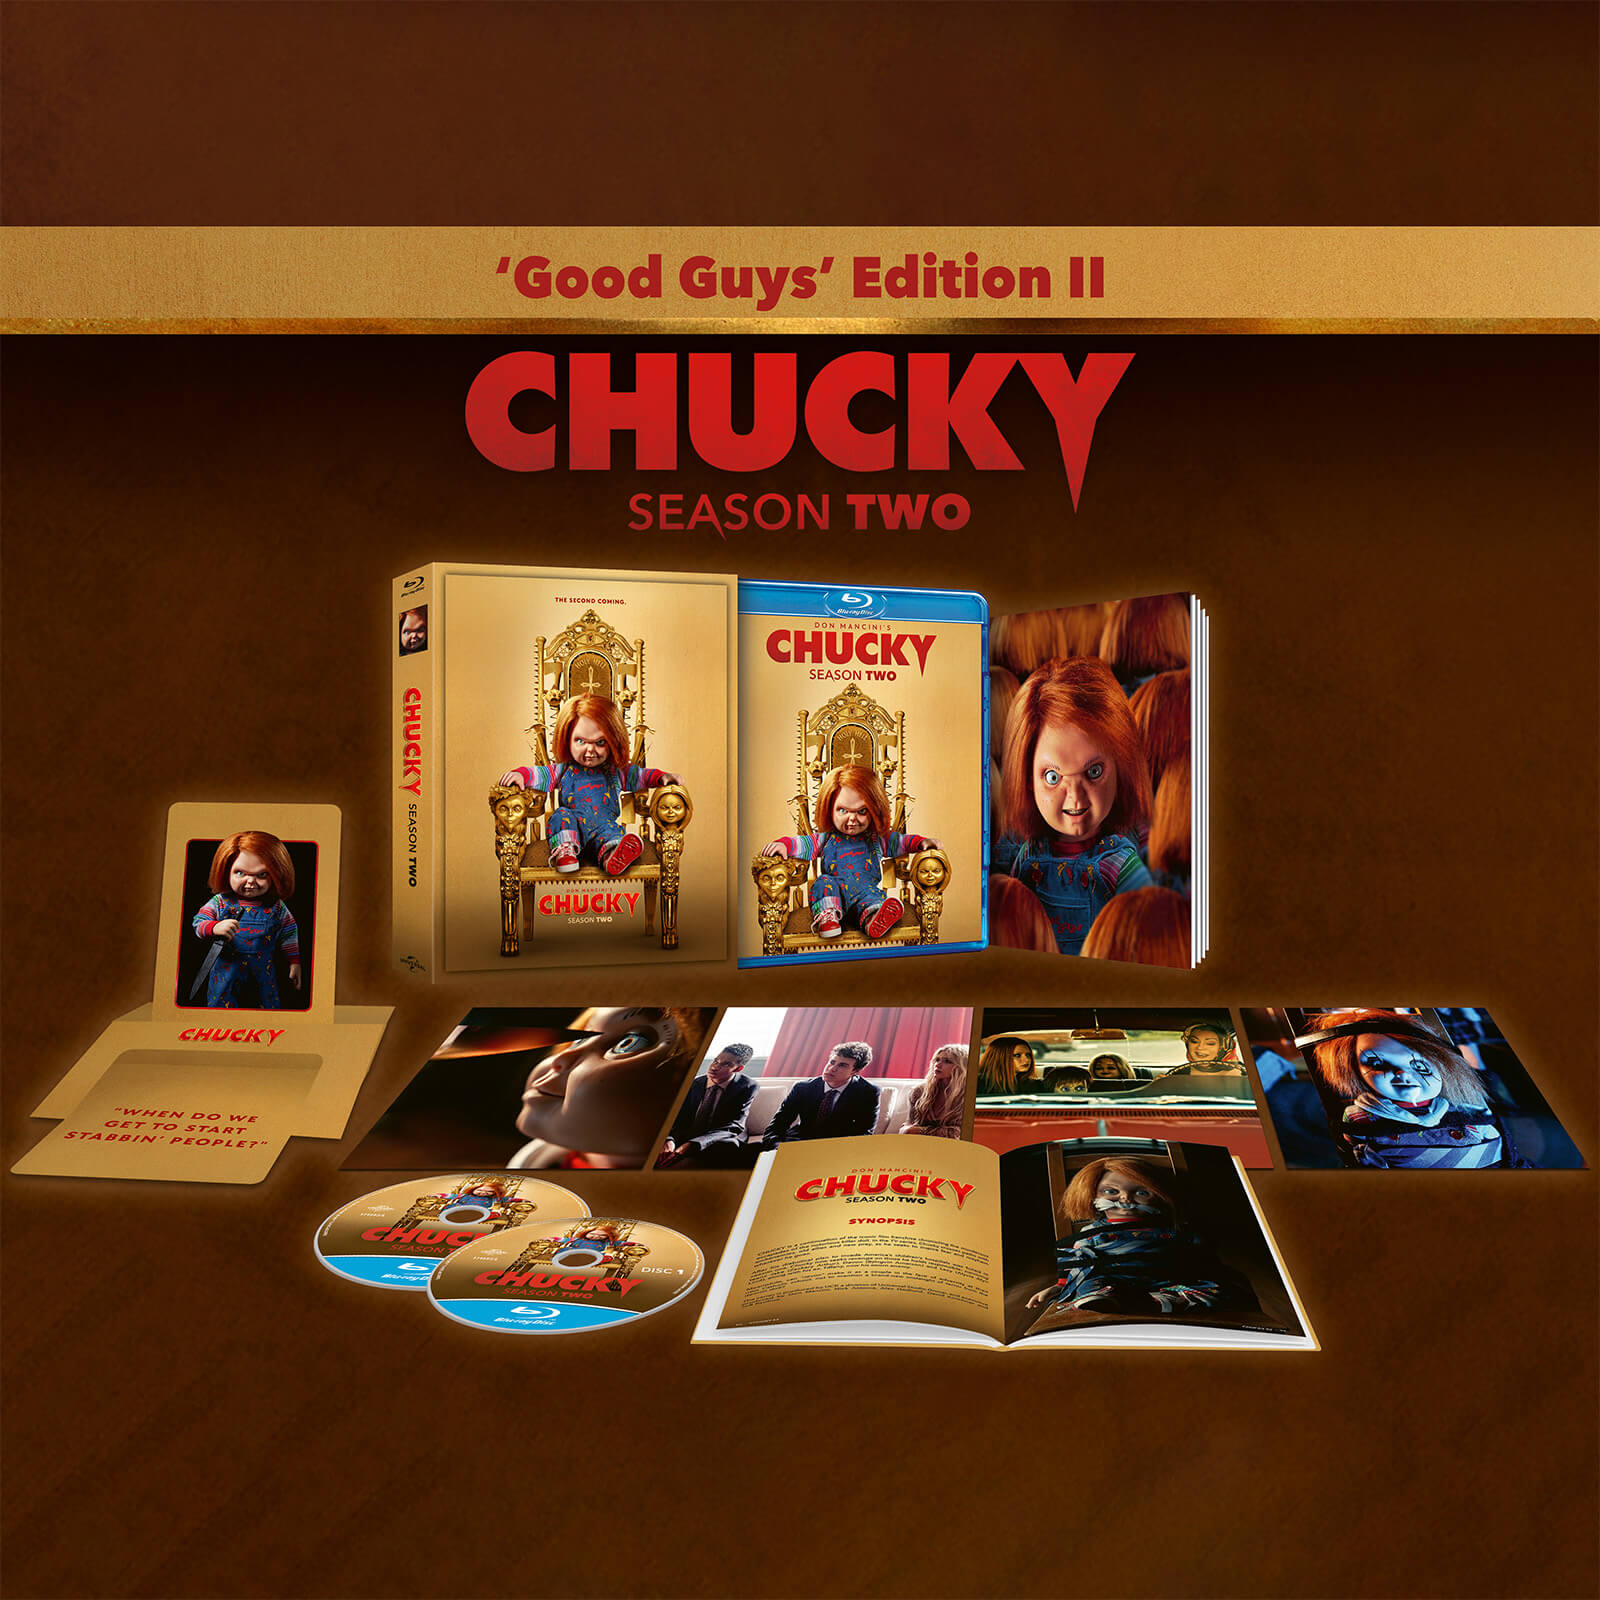 Chucky Season Two - Good Guys II Edition